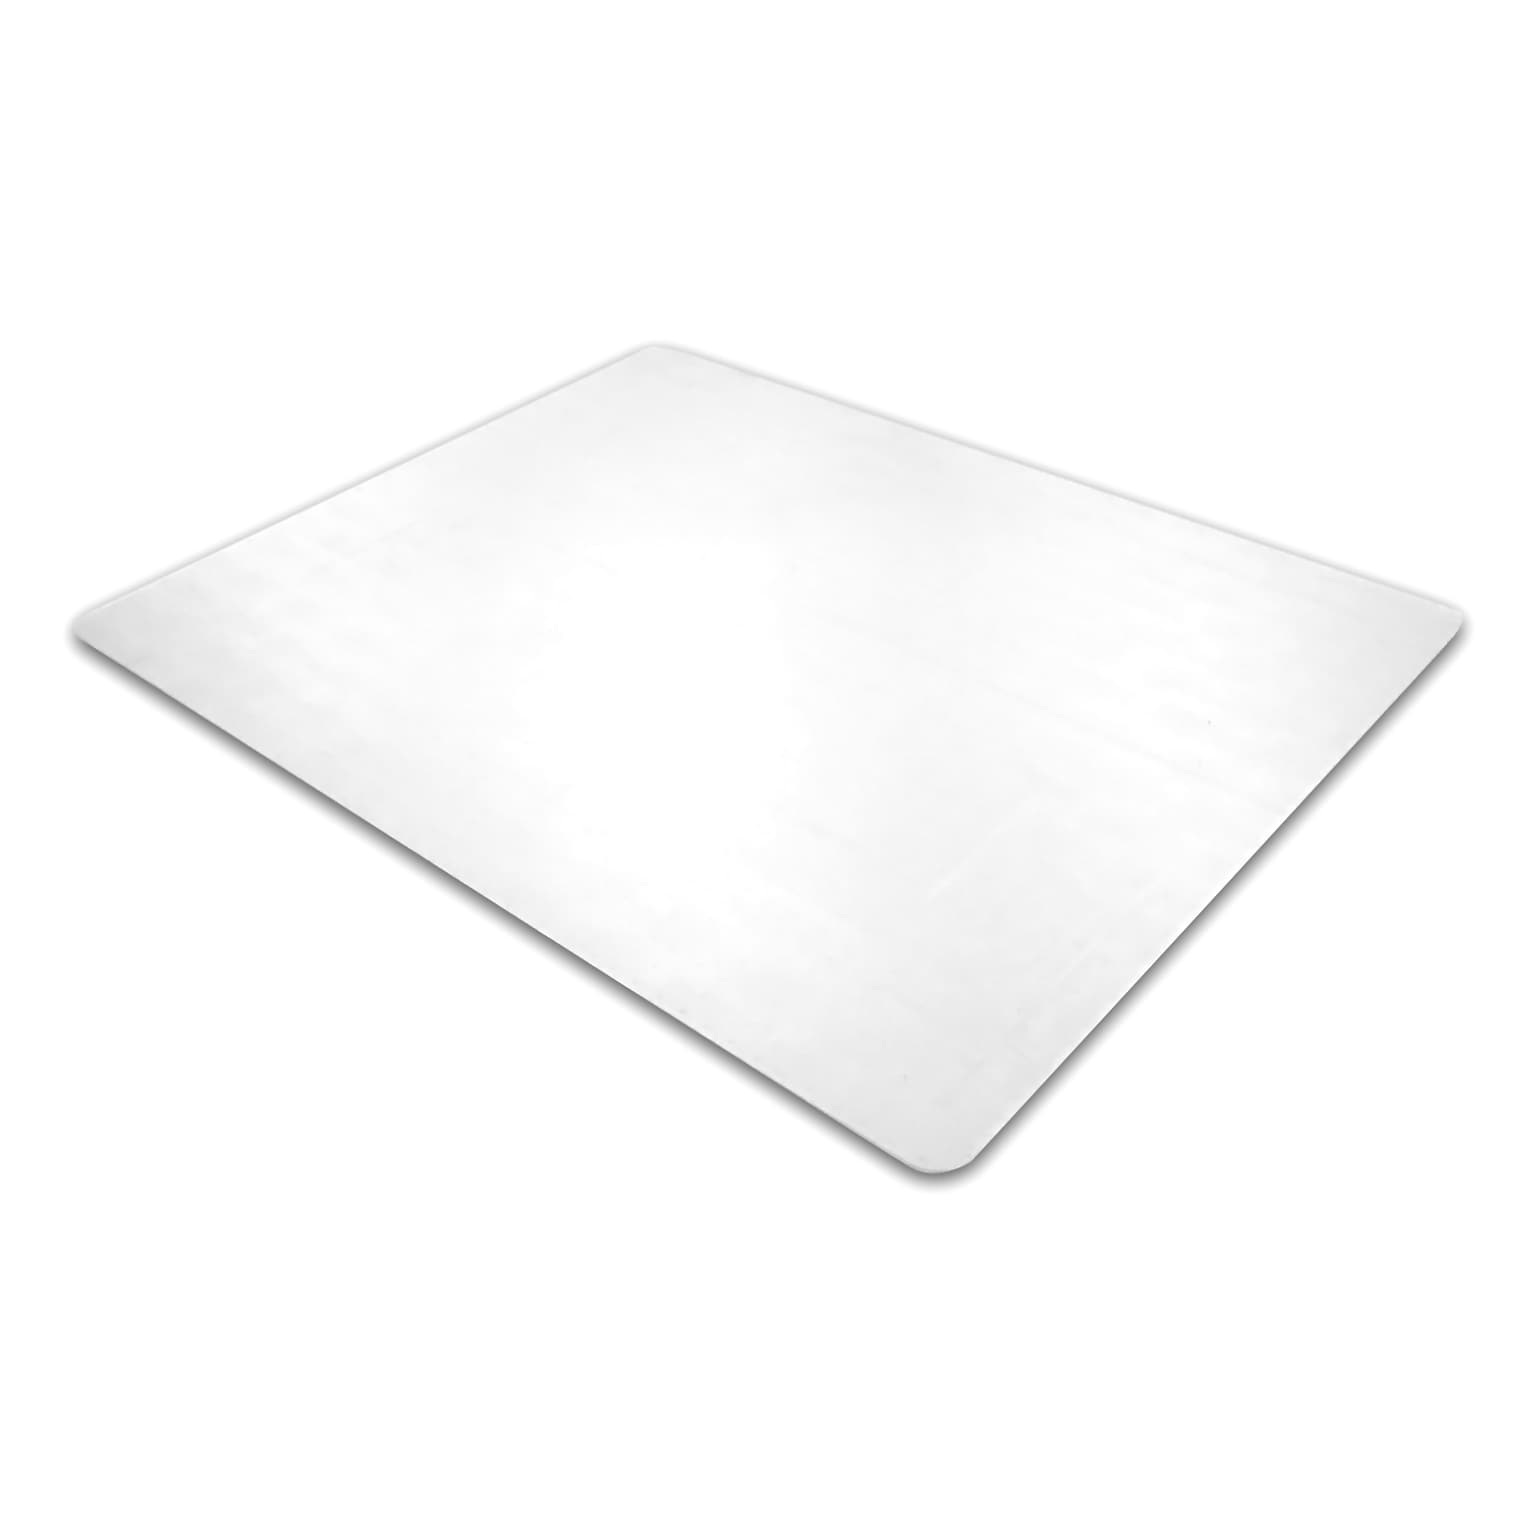 Floortex Cleartex Unomat Hard Floor and Carpet Tiles Chair Mat, 48 x 60, Clear Polycarbonate (1215020ERA)